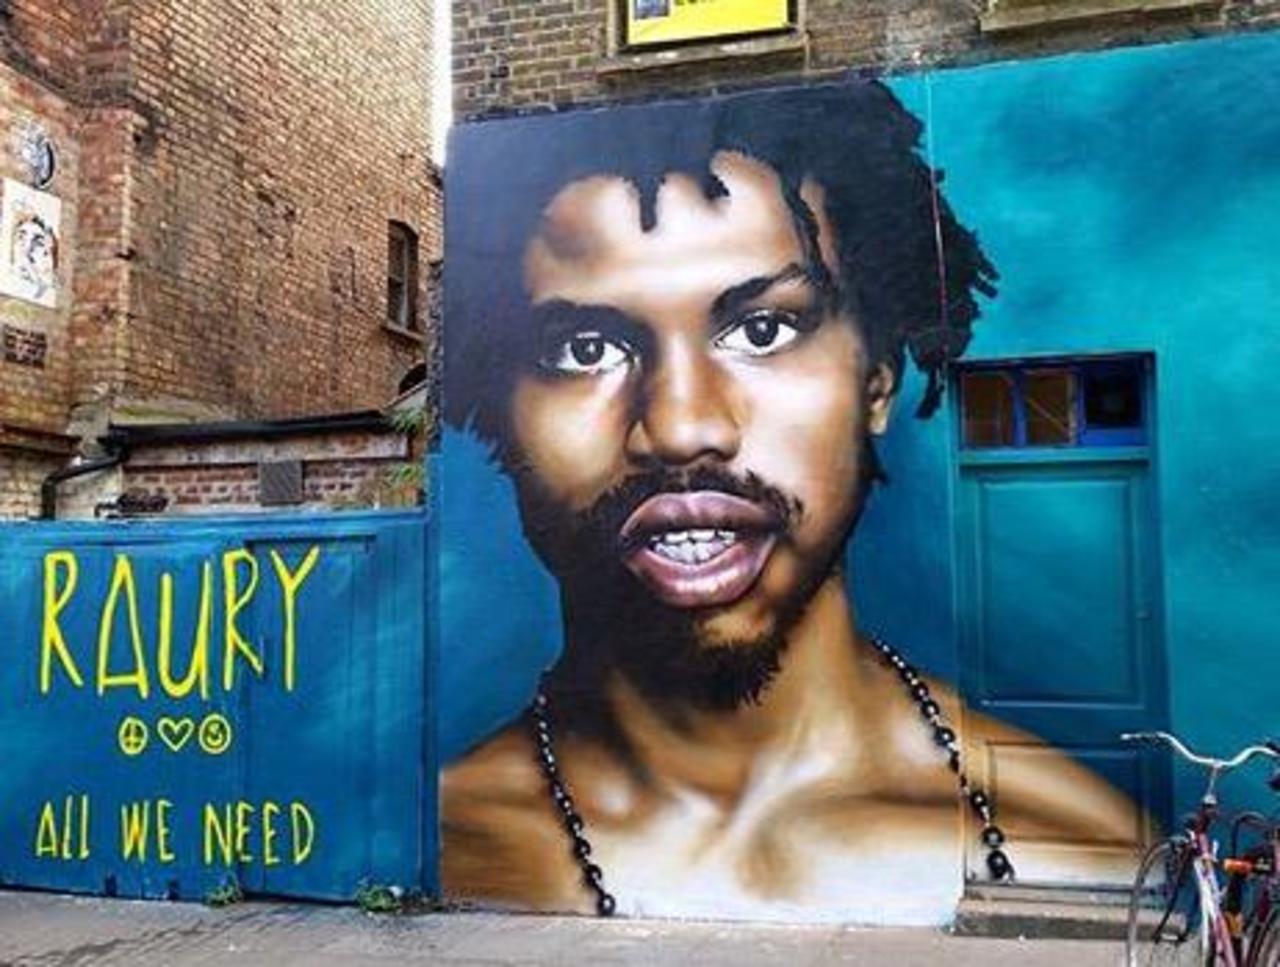 New Street Art of Raury by Olliver Switch in Brick Lane 

#art #graffiti #mural #streetart http://t.co/1YLh9YRNiV